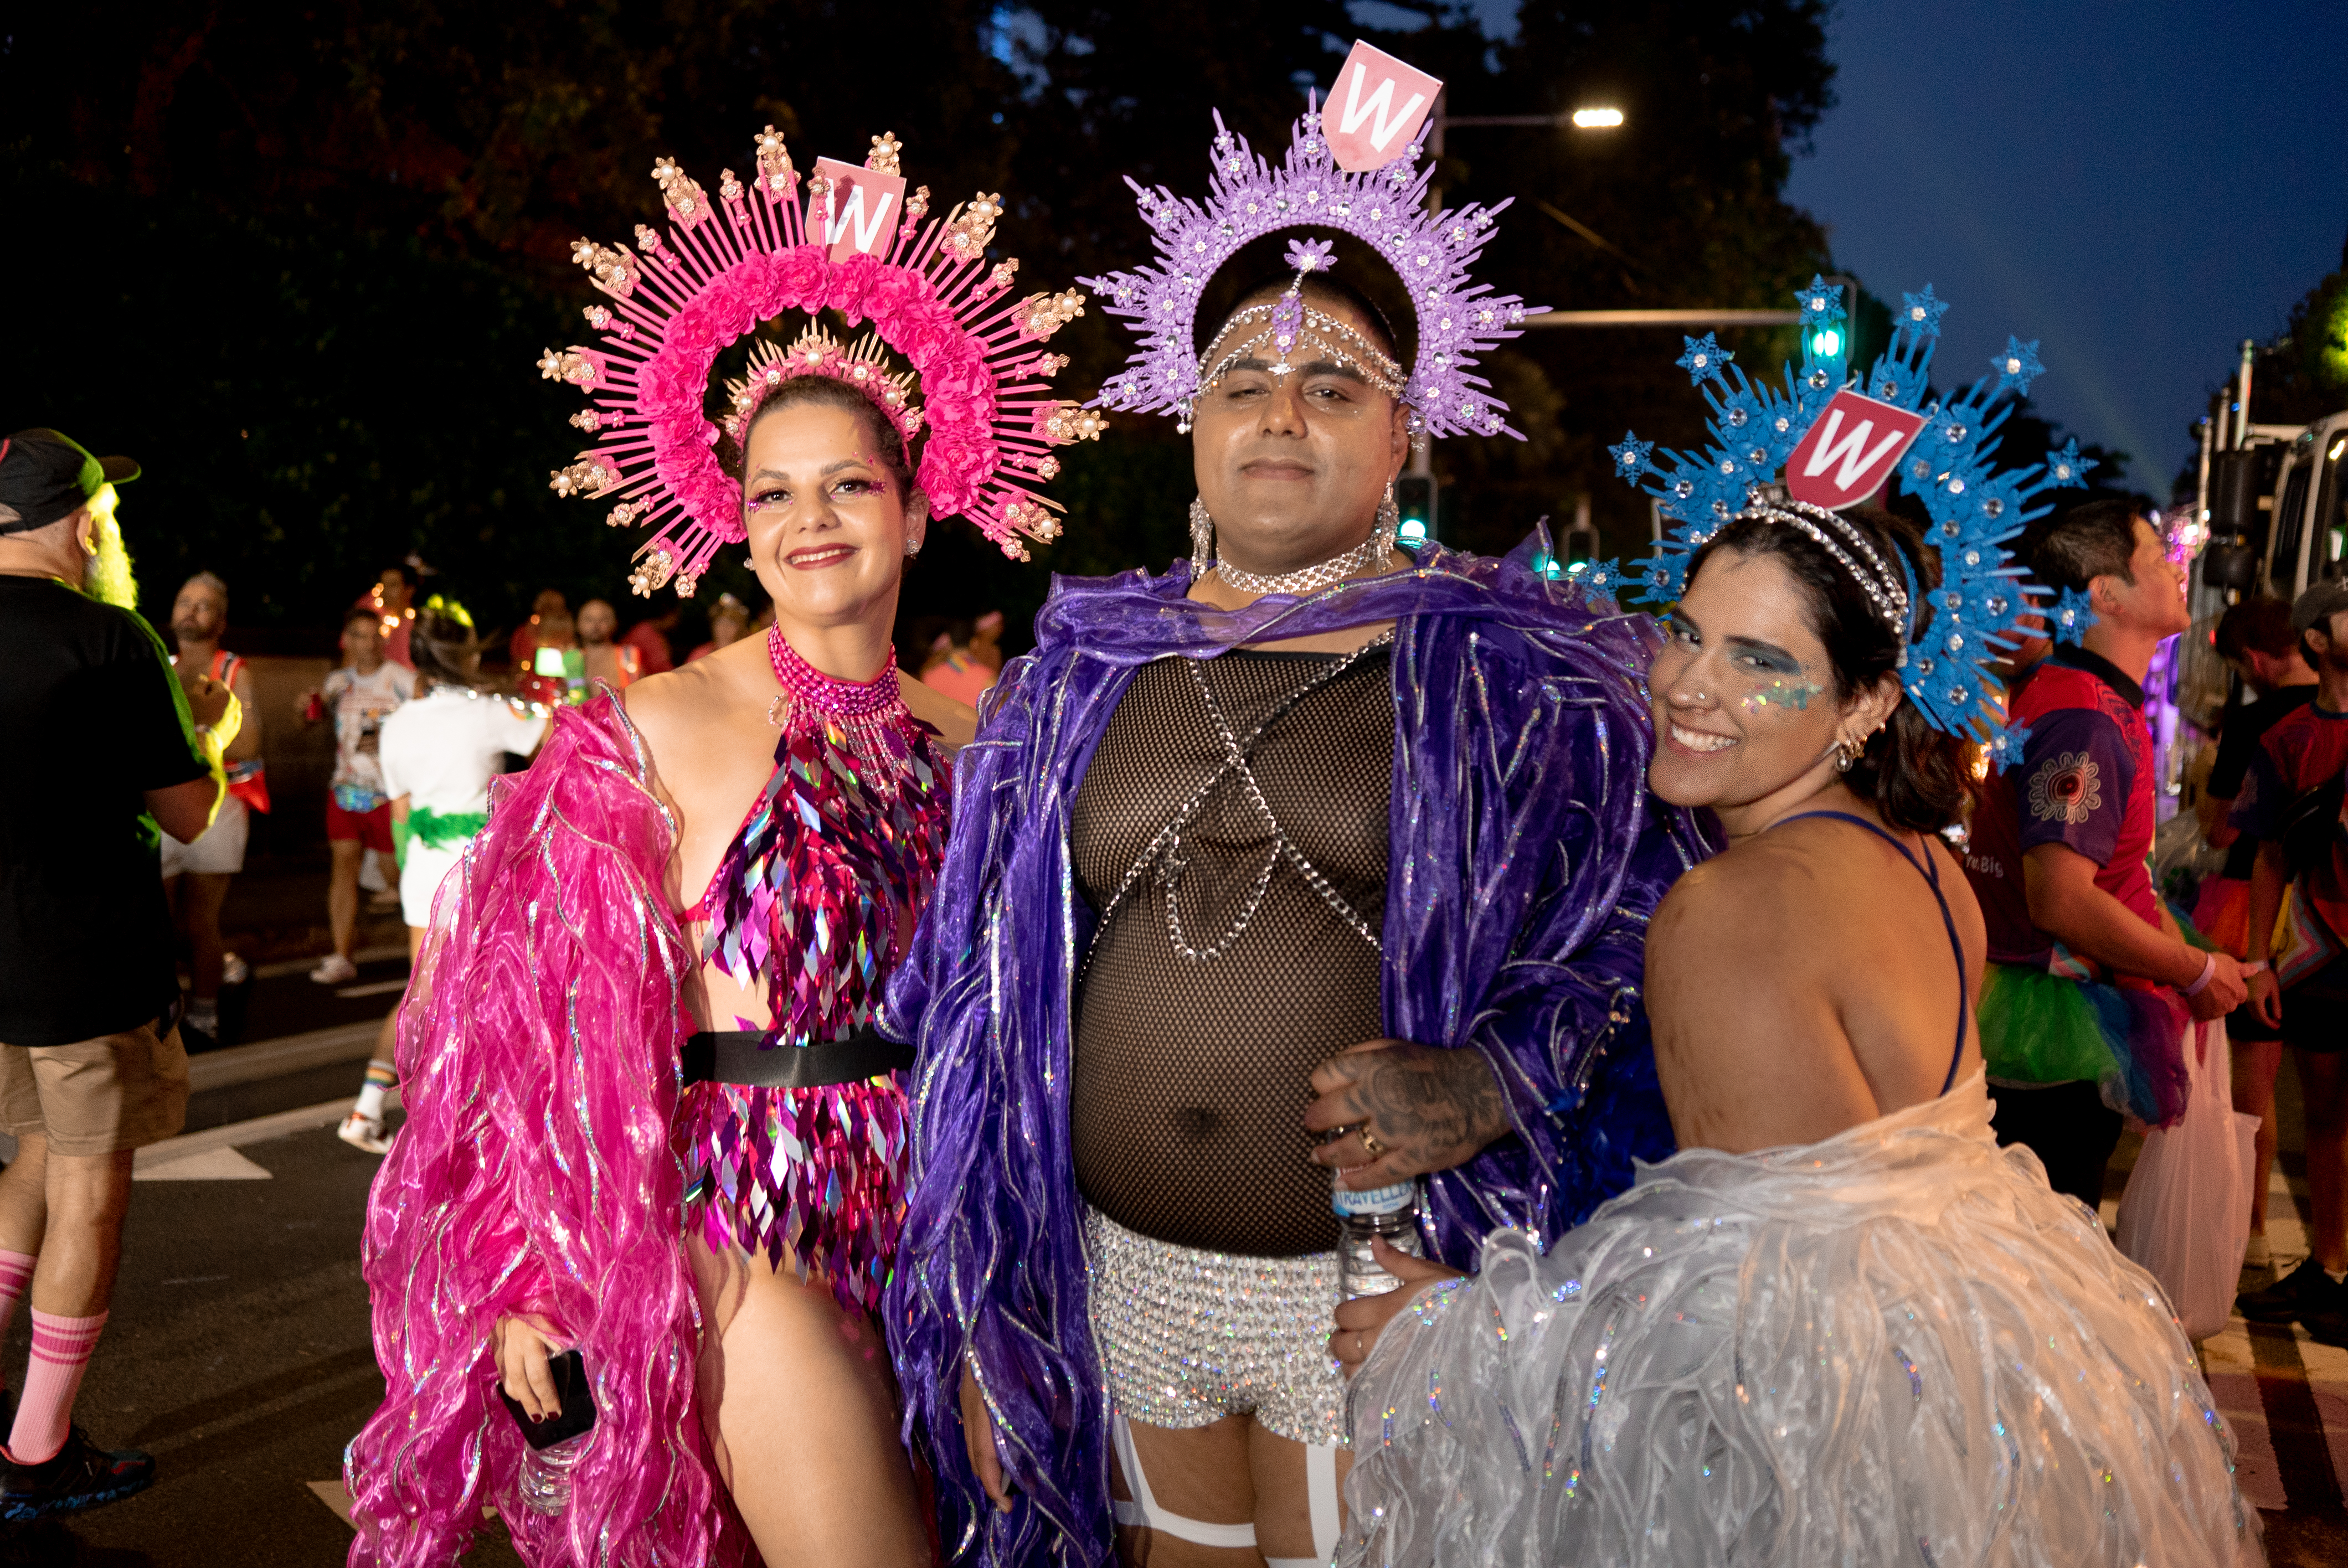 Three WSU Mardi Gras participants wearing extravagant costumes